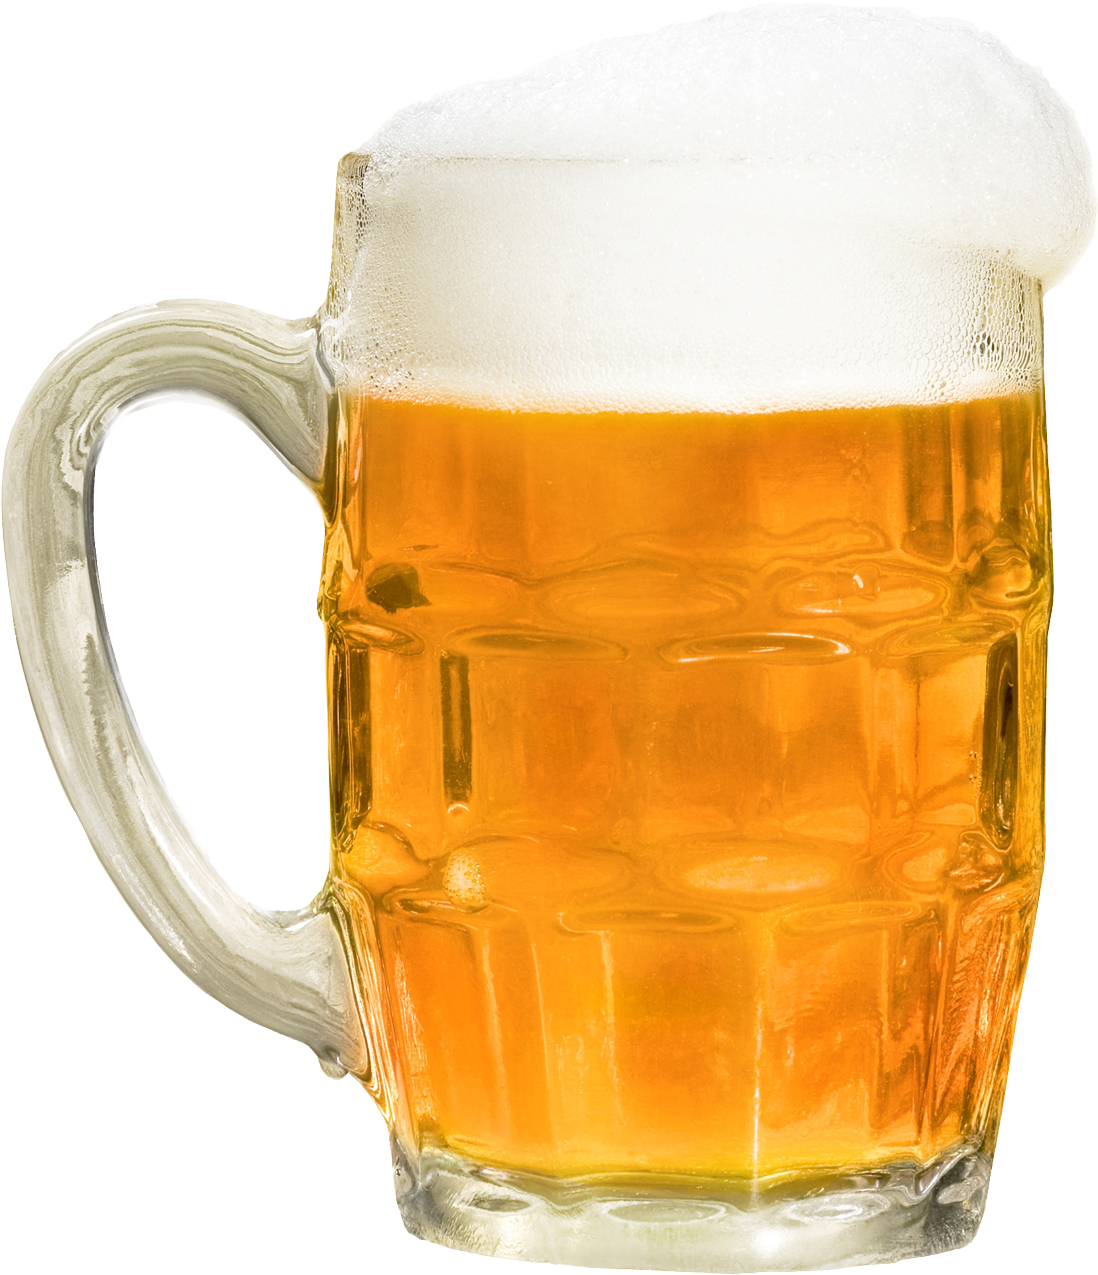 Beer Mug Png Transparent Image - Beer In Mug Png (500x559), Png Download